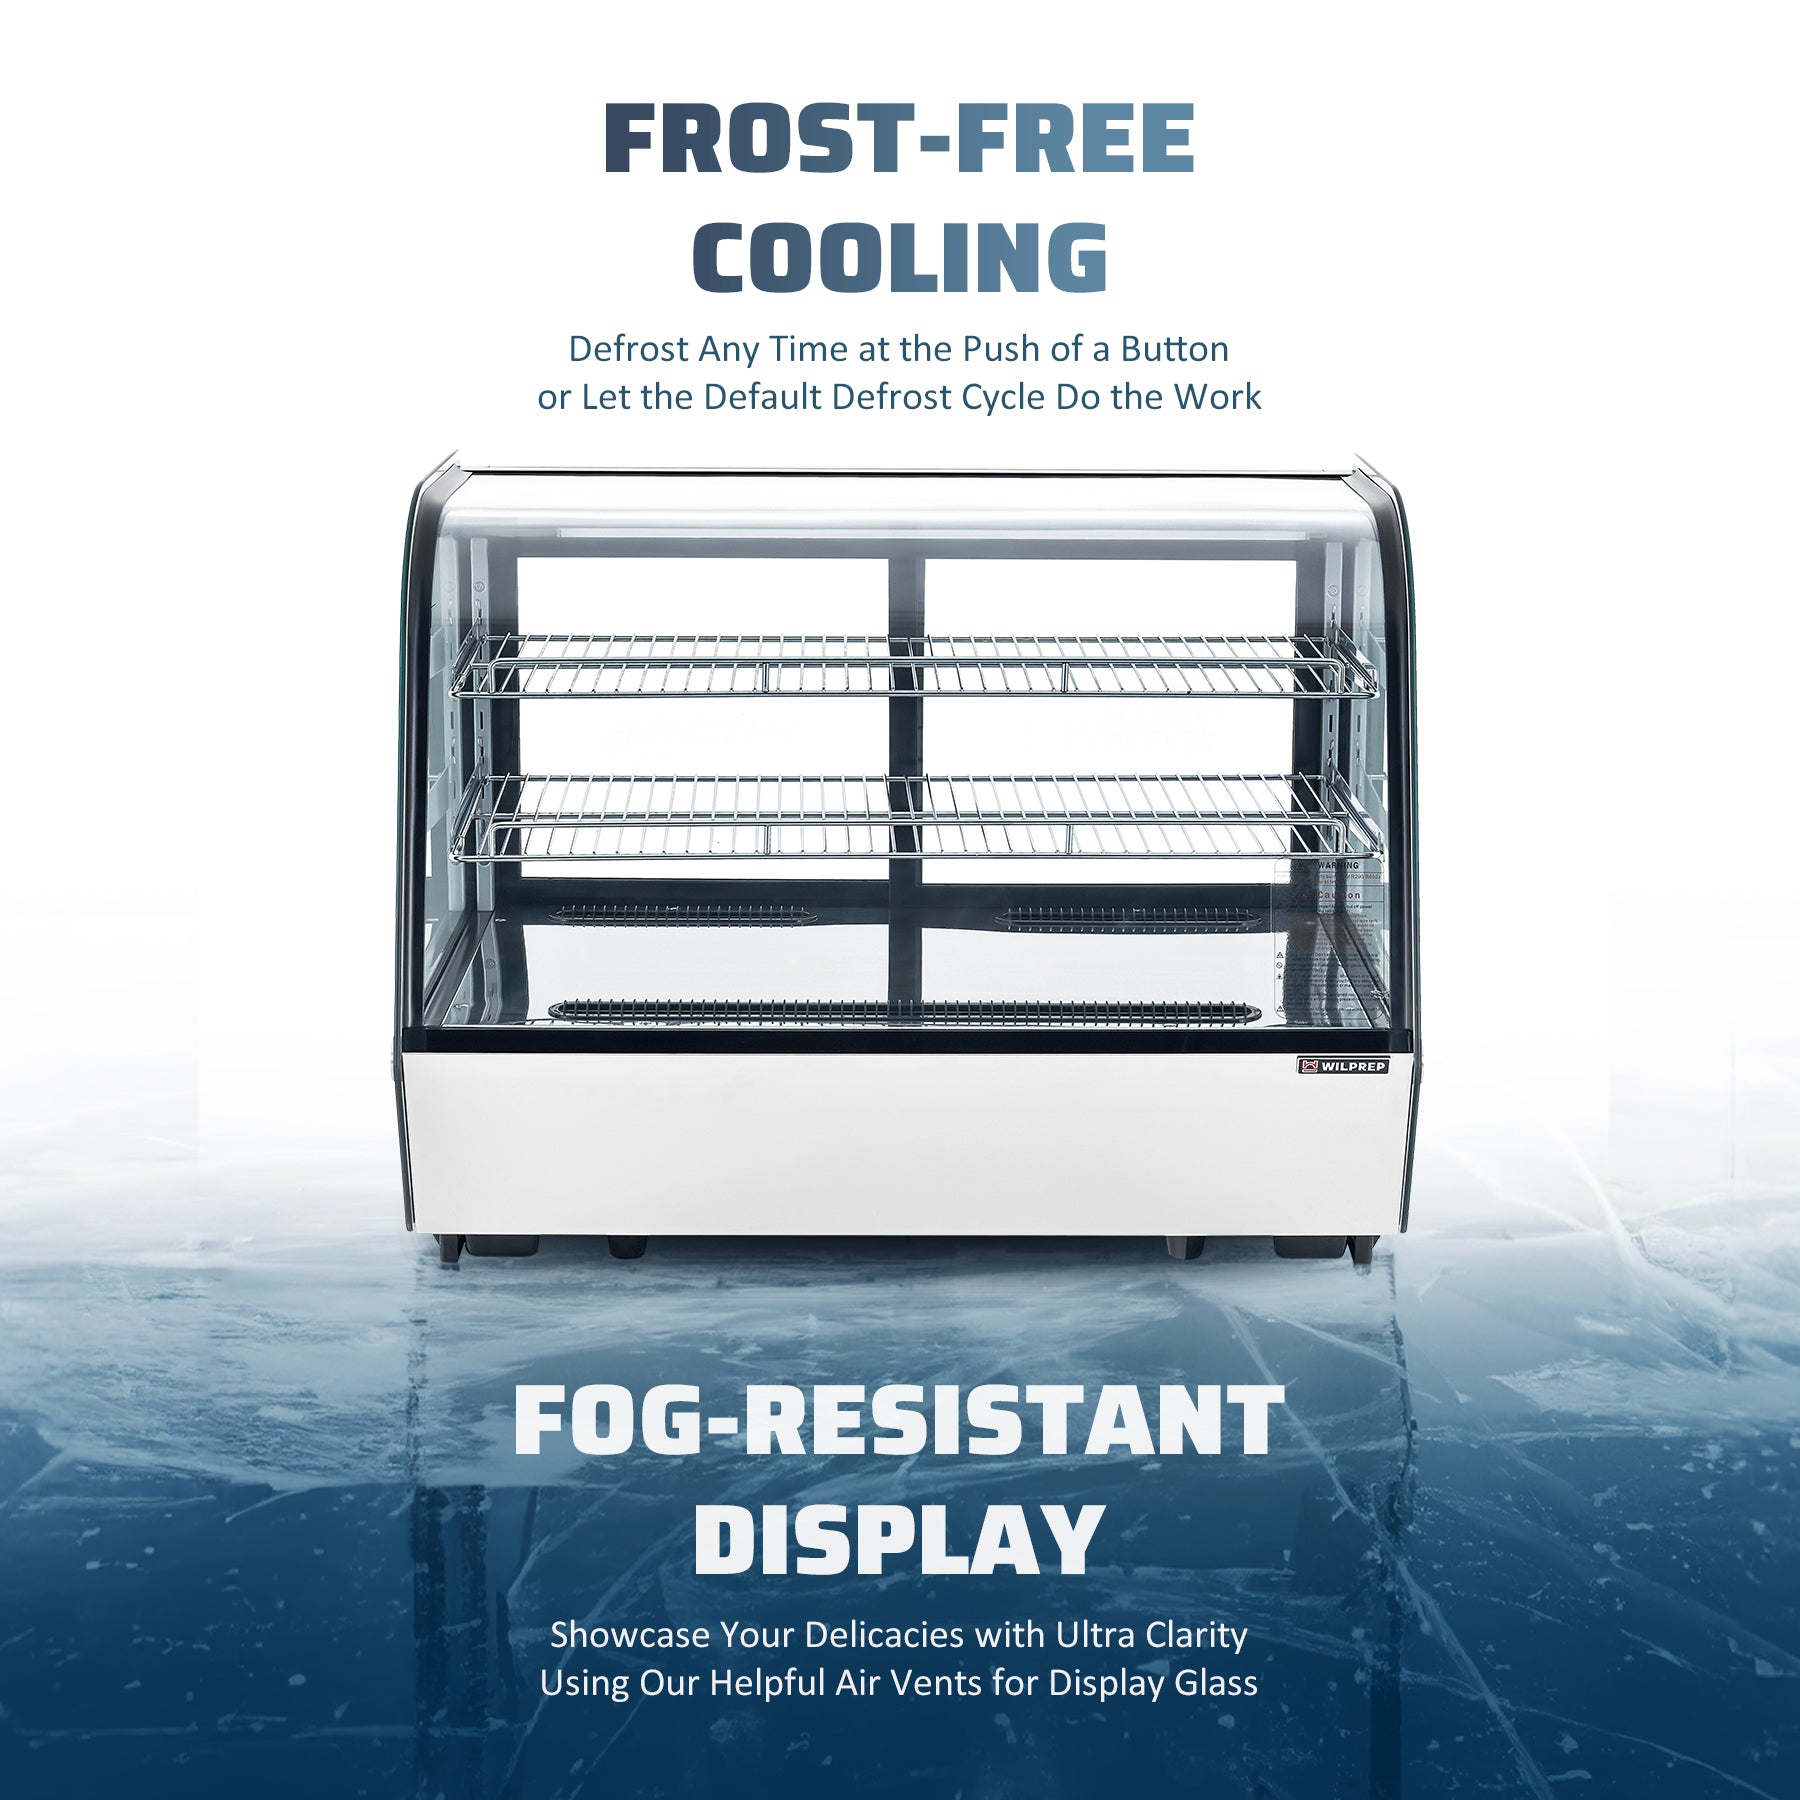 Wilprep 35-inch countertop display refrigerator froist free